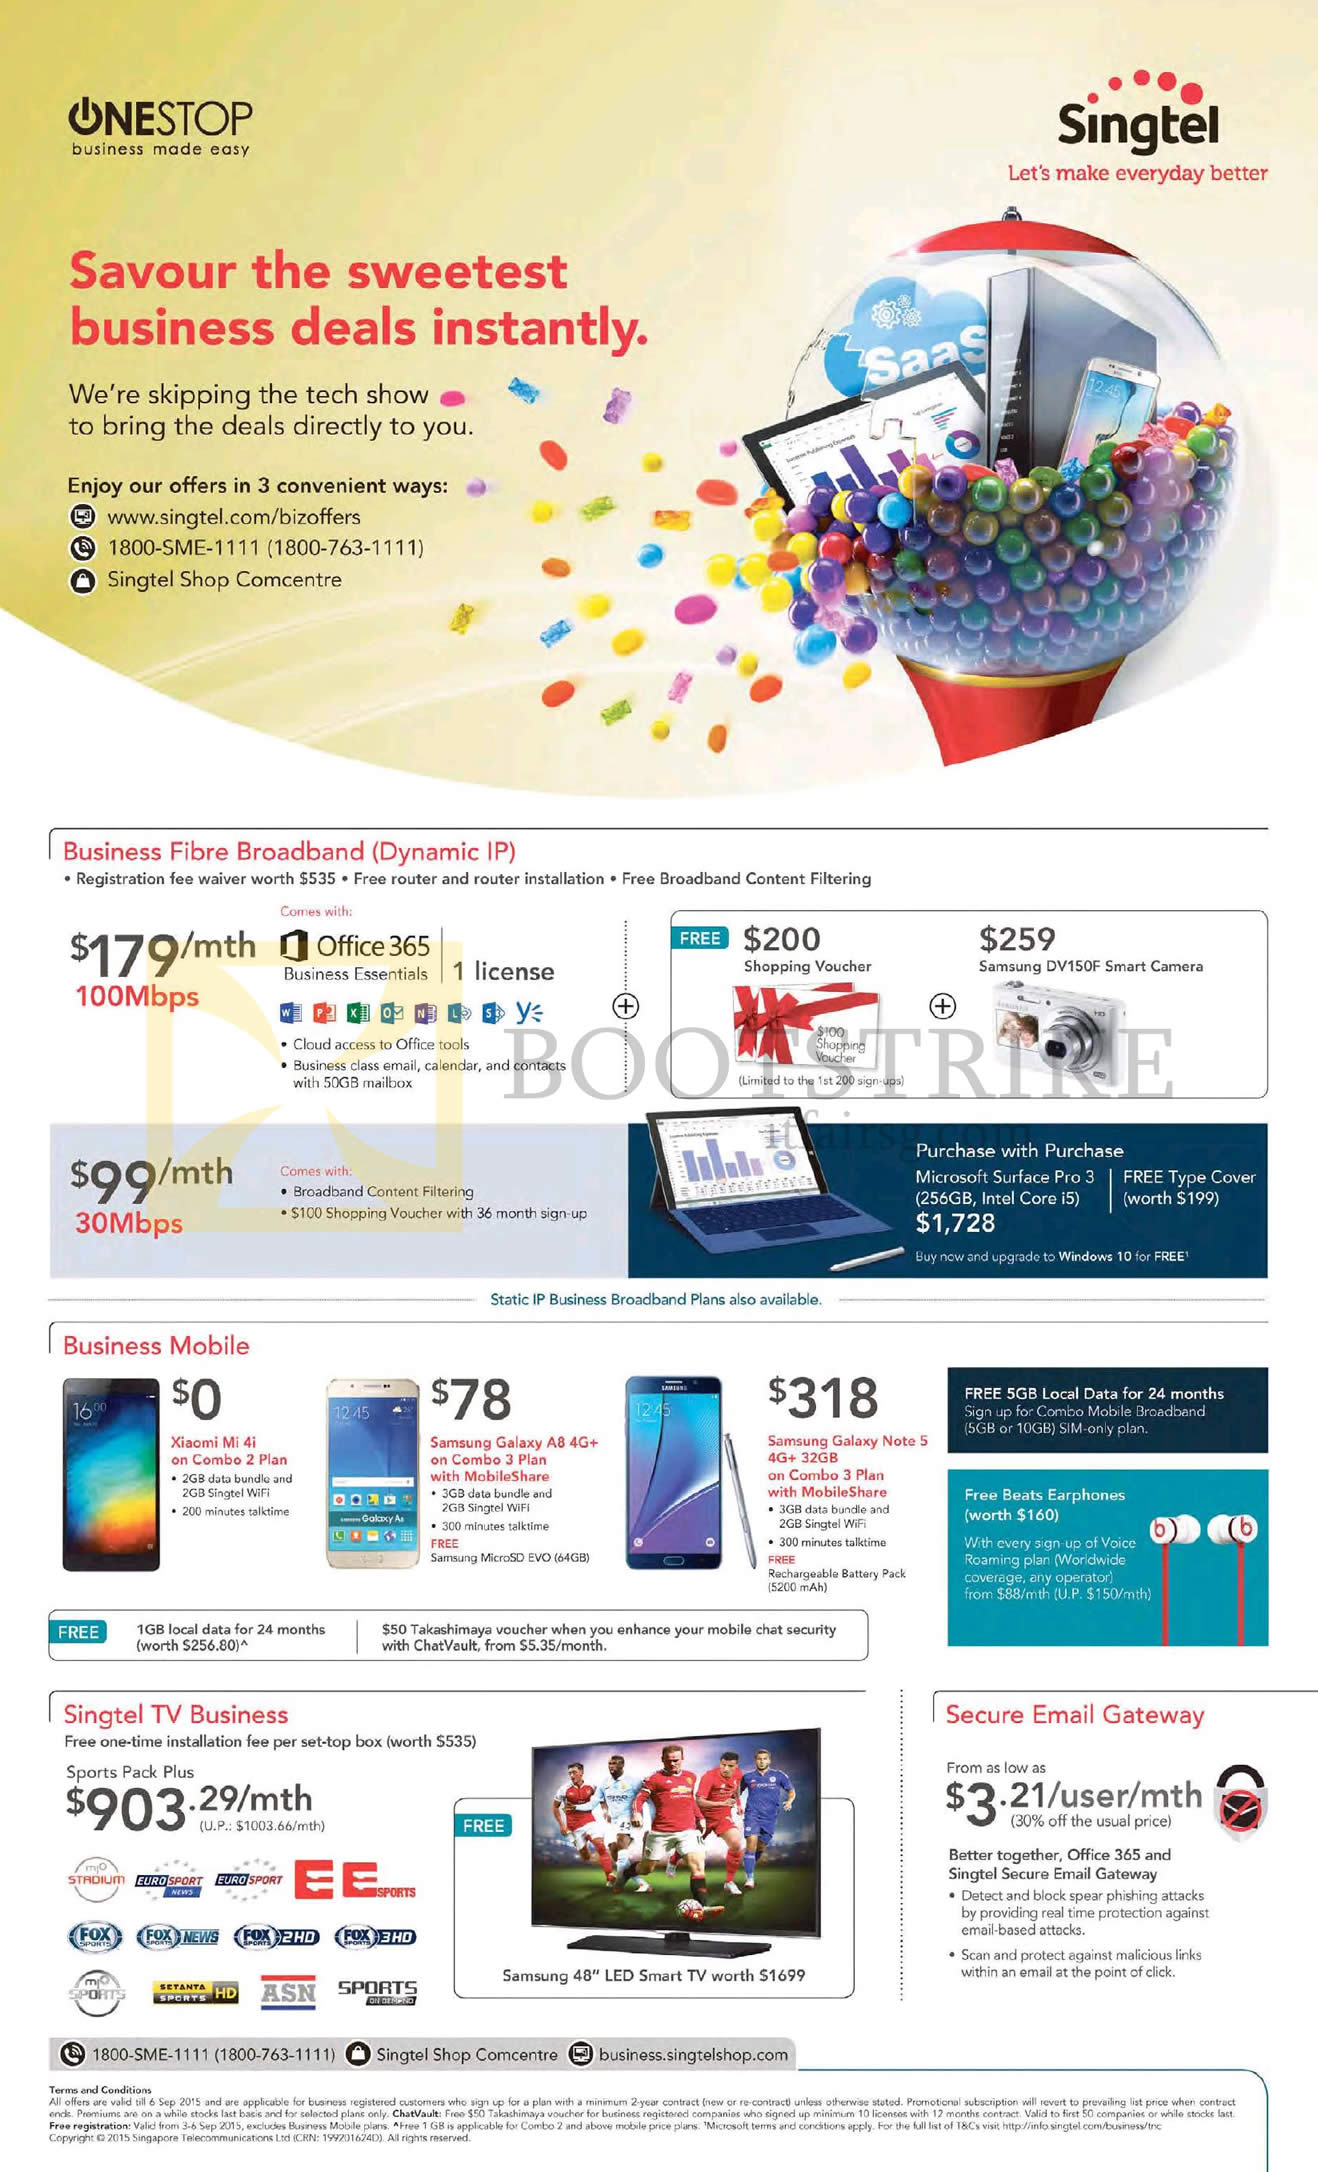 COMEX 2015 price list image brochure of Singtel Business Fibre Broadband, Business Mobile, TV Business, Secure Email Gateway